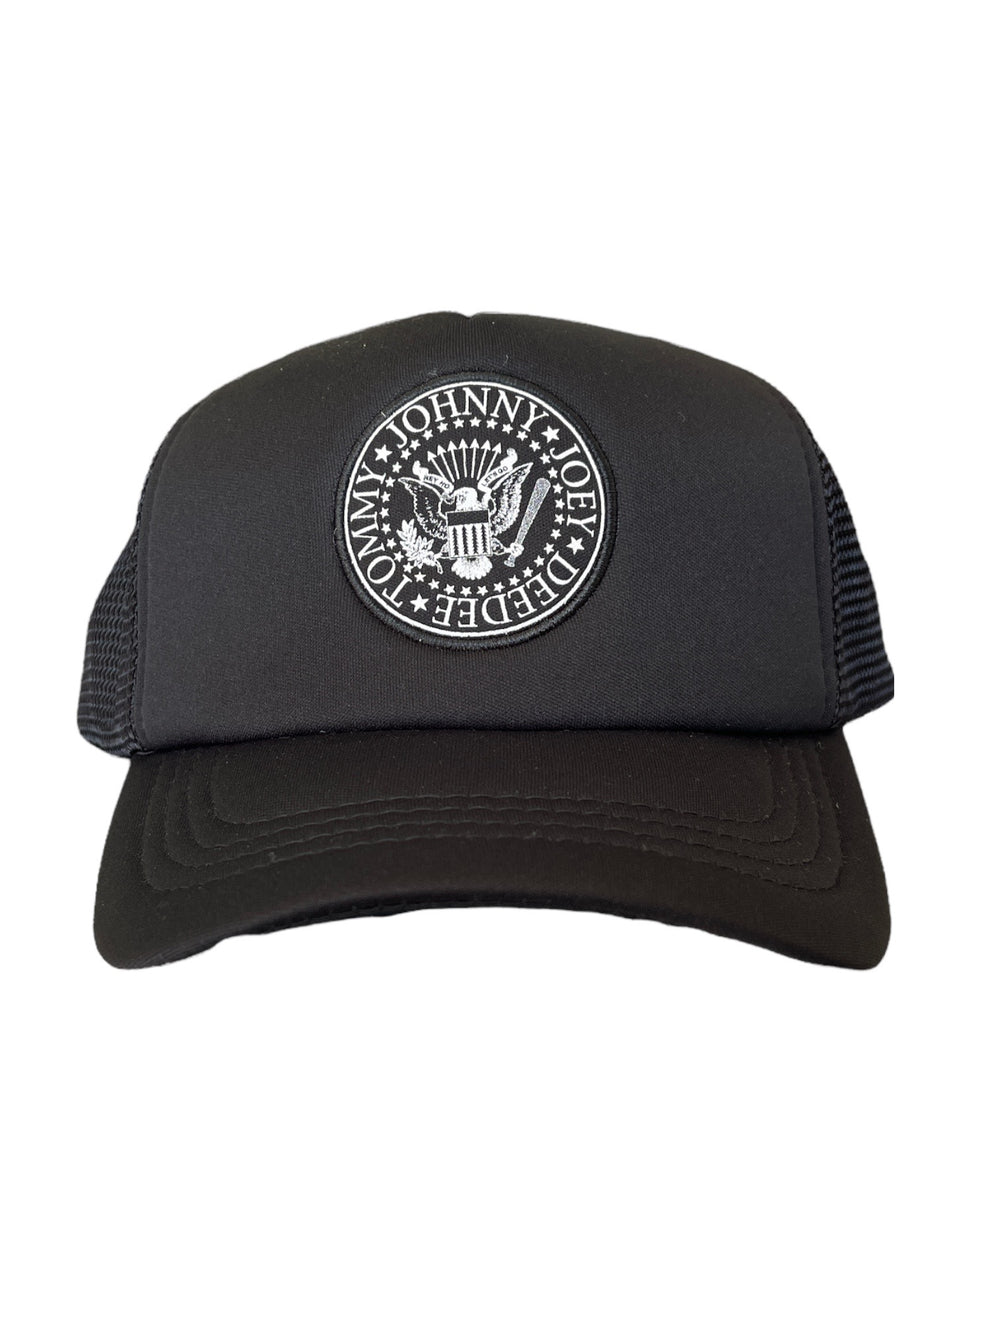 Ramones The Seal Official Mesh Peak Cap Adjustable Brand New